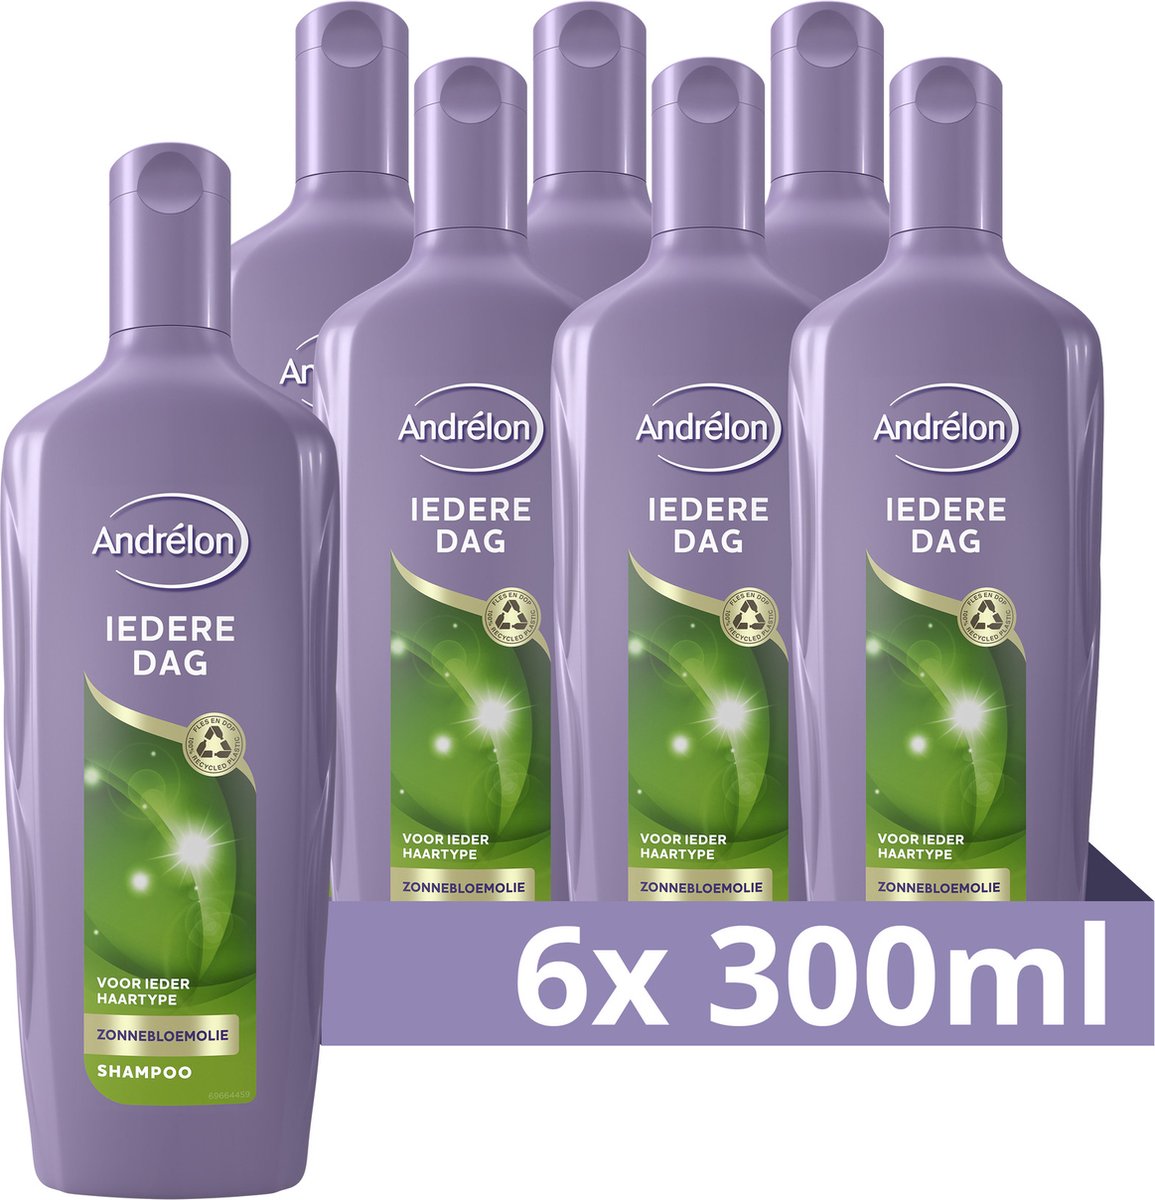 4. Andrlon Andrélon Iedere Dag Shampoo